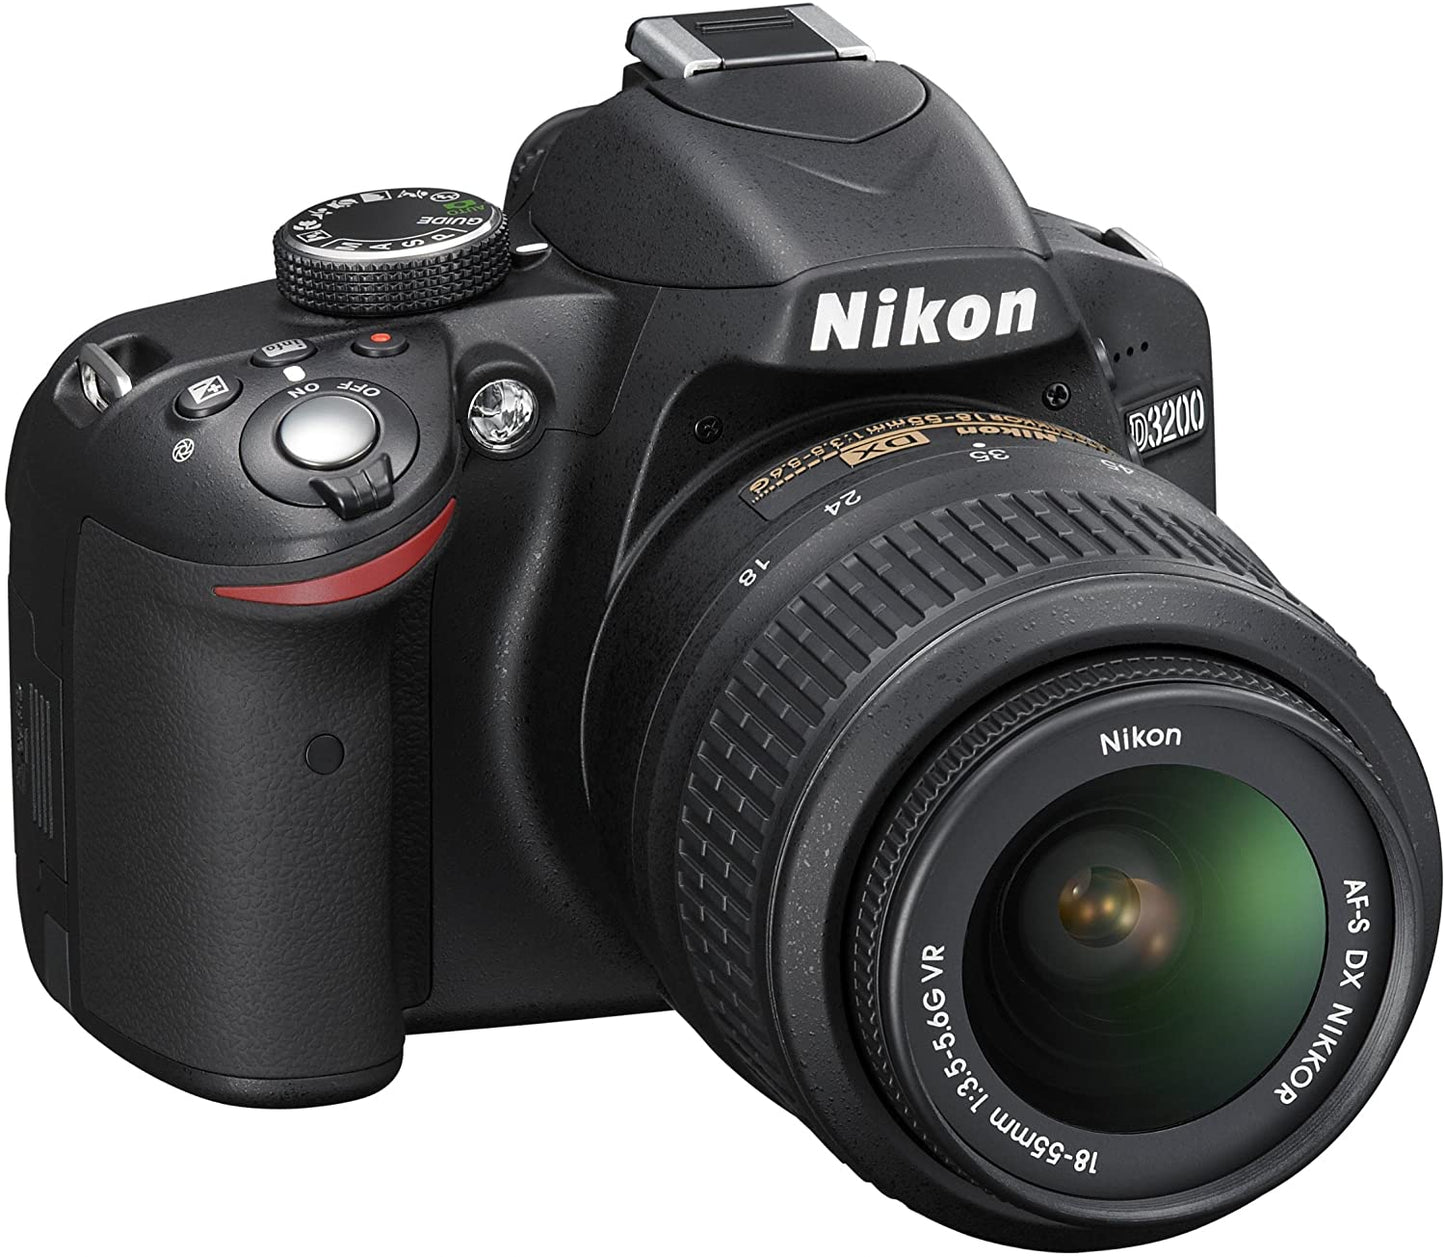 Nikon D3200 Camera 24.2 MP CMOS Digital SLR with 18-55mm f/3.5-5.6 Auto Focus-S DX VR NIKKOR Zoom Lens (Black) (USED) R 4500